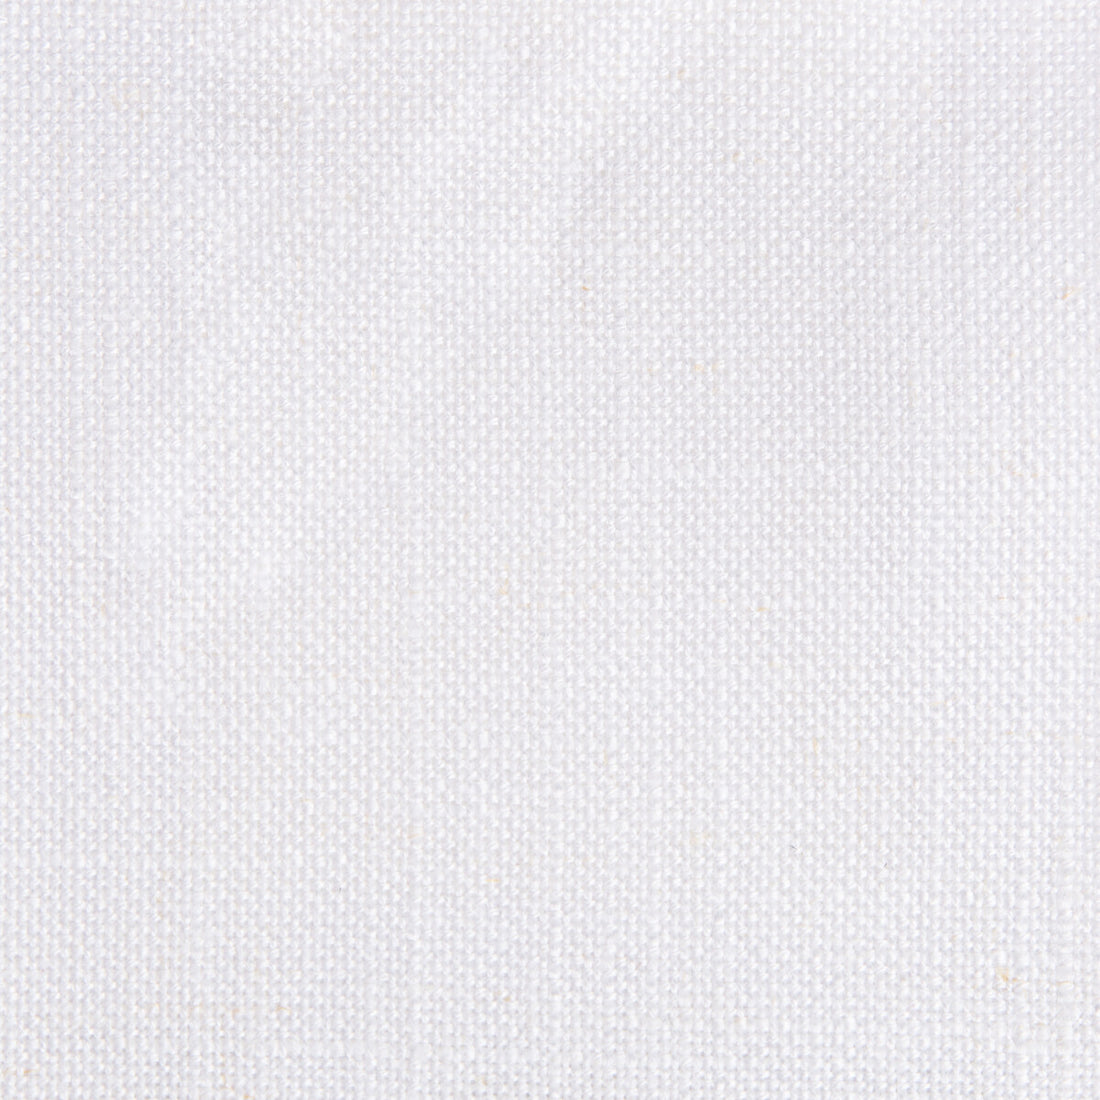 Peru fabric in blanco color - pattern GDT5548.001.0 - by Gaston y Daniela in the Gaston Nuevo Mundo collection